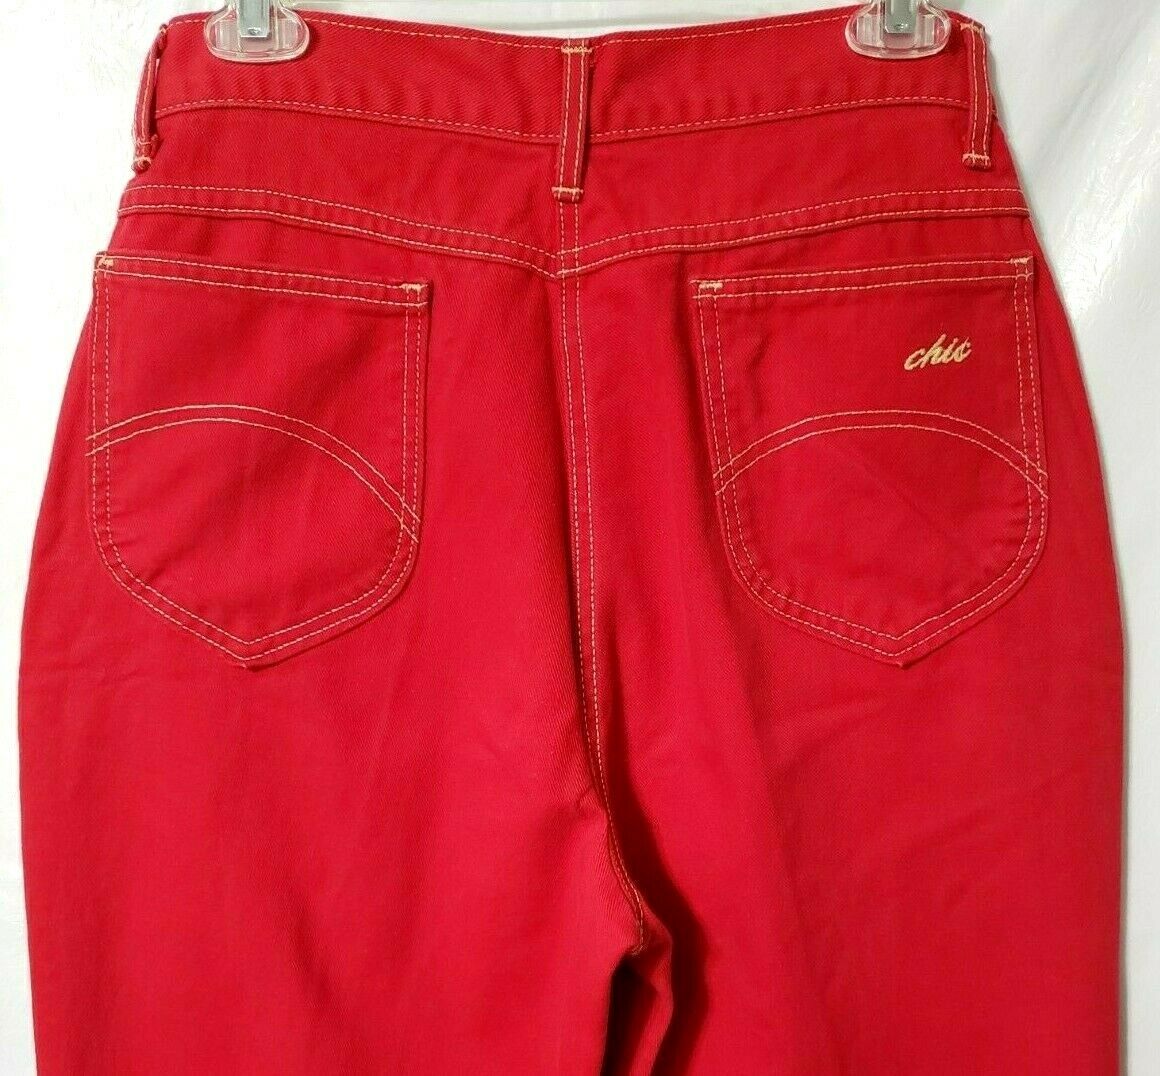 Vintage 80s Chic Women Jeans 12 Cherry Red Denim Ultra High Waist Taper Leg Mom